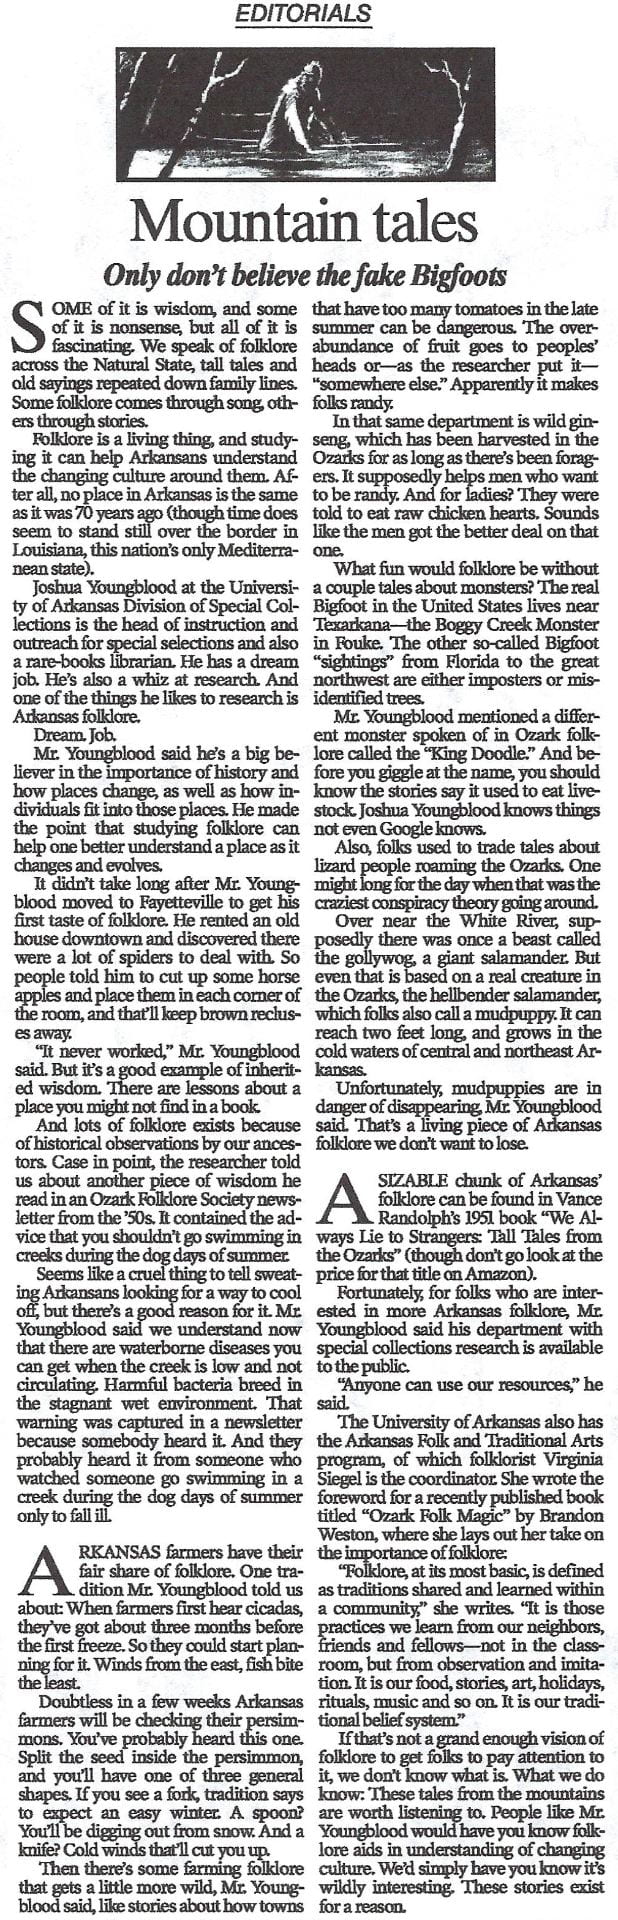 "Mountain Tales" article in the Arkansas Democrat-Gazette